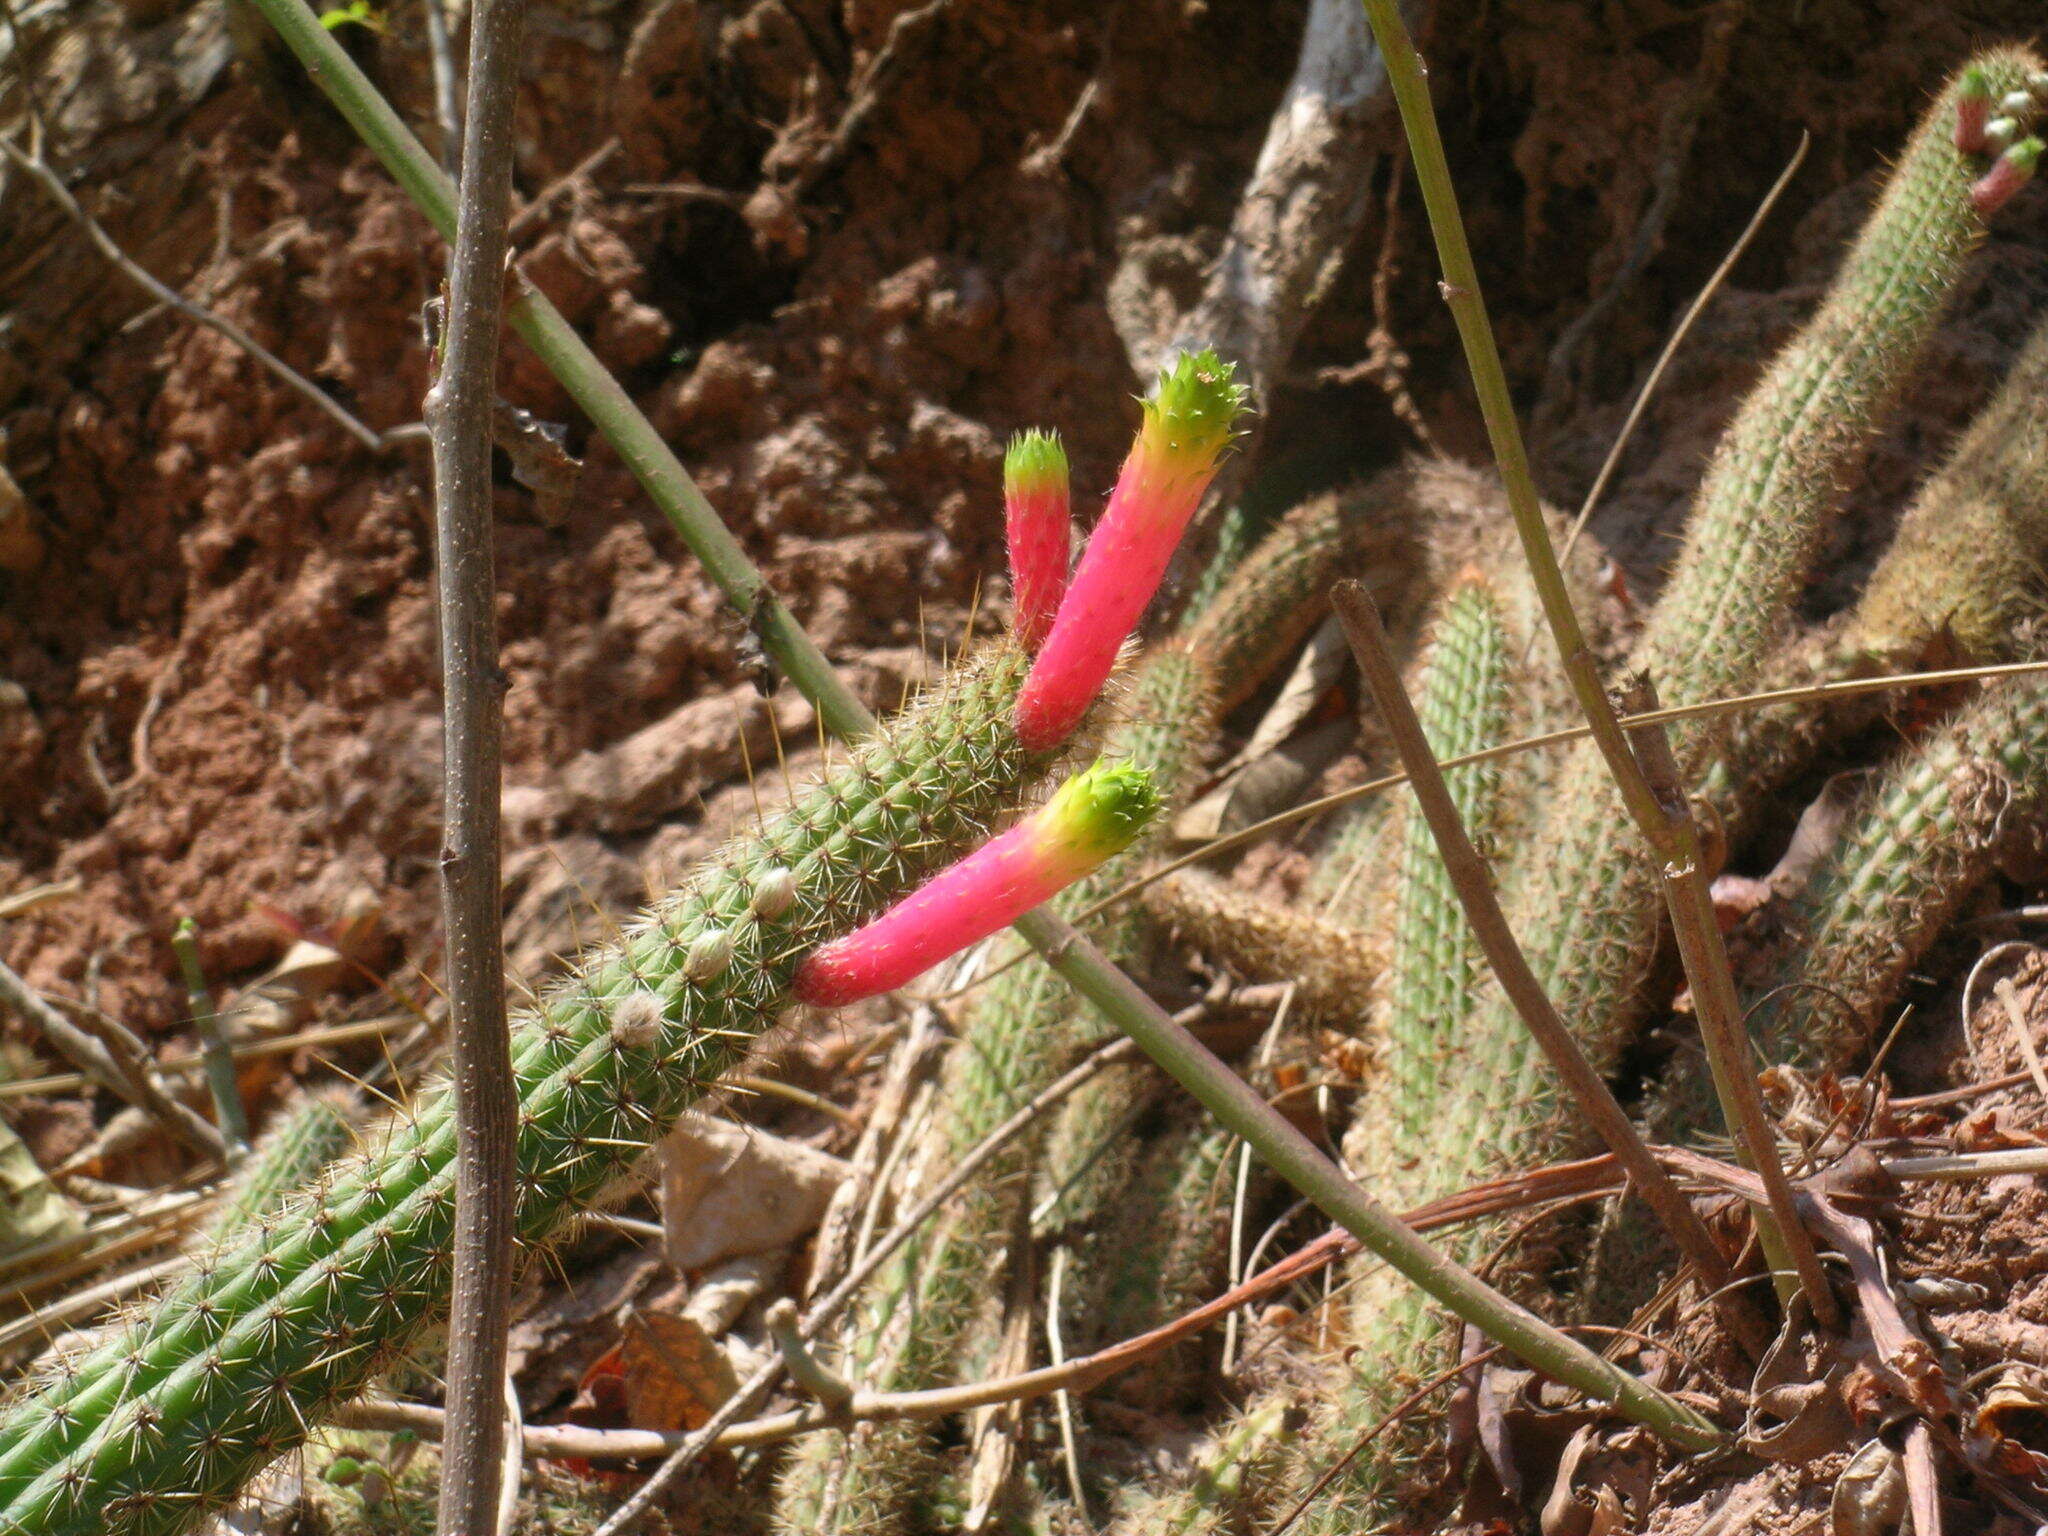 Image of Cleistocactus smaragdiflorus (F. A. C. Weber) Britton & Rose